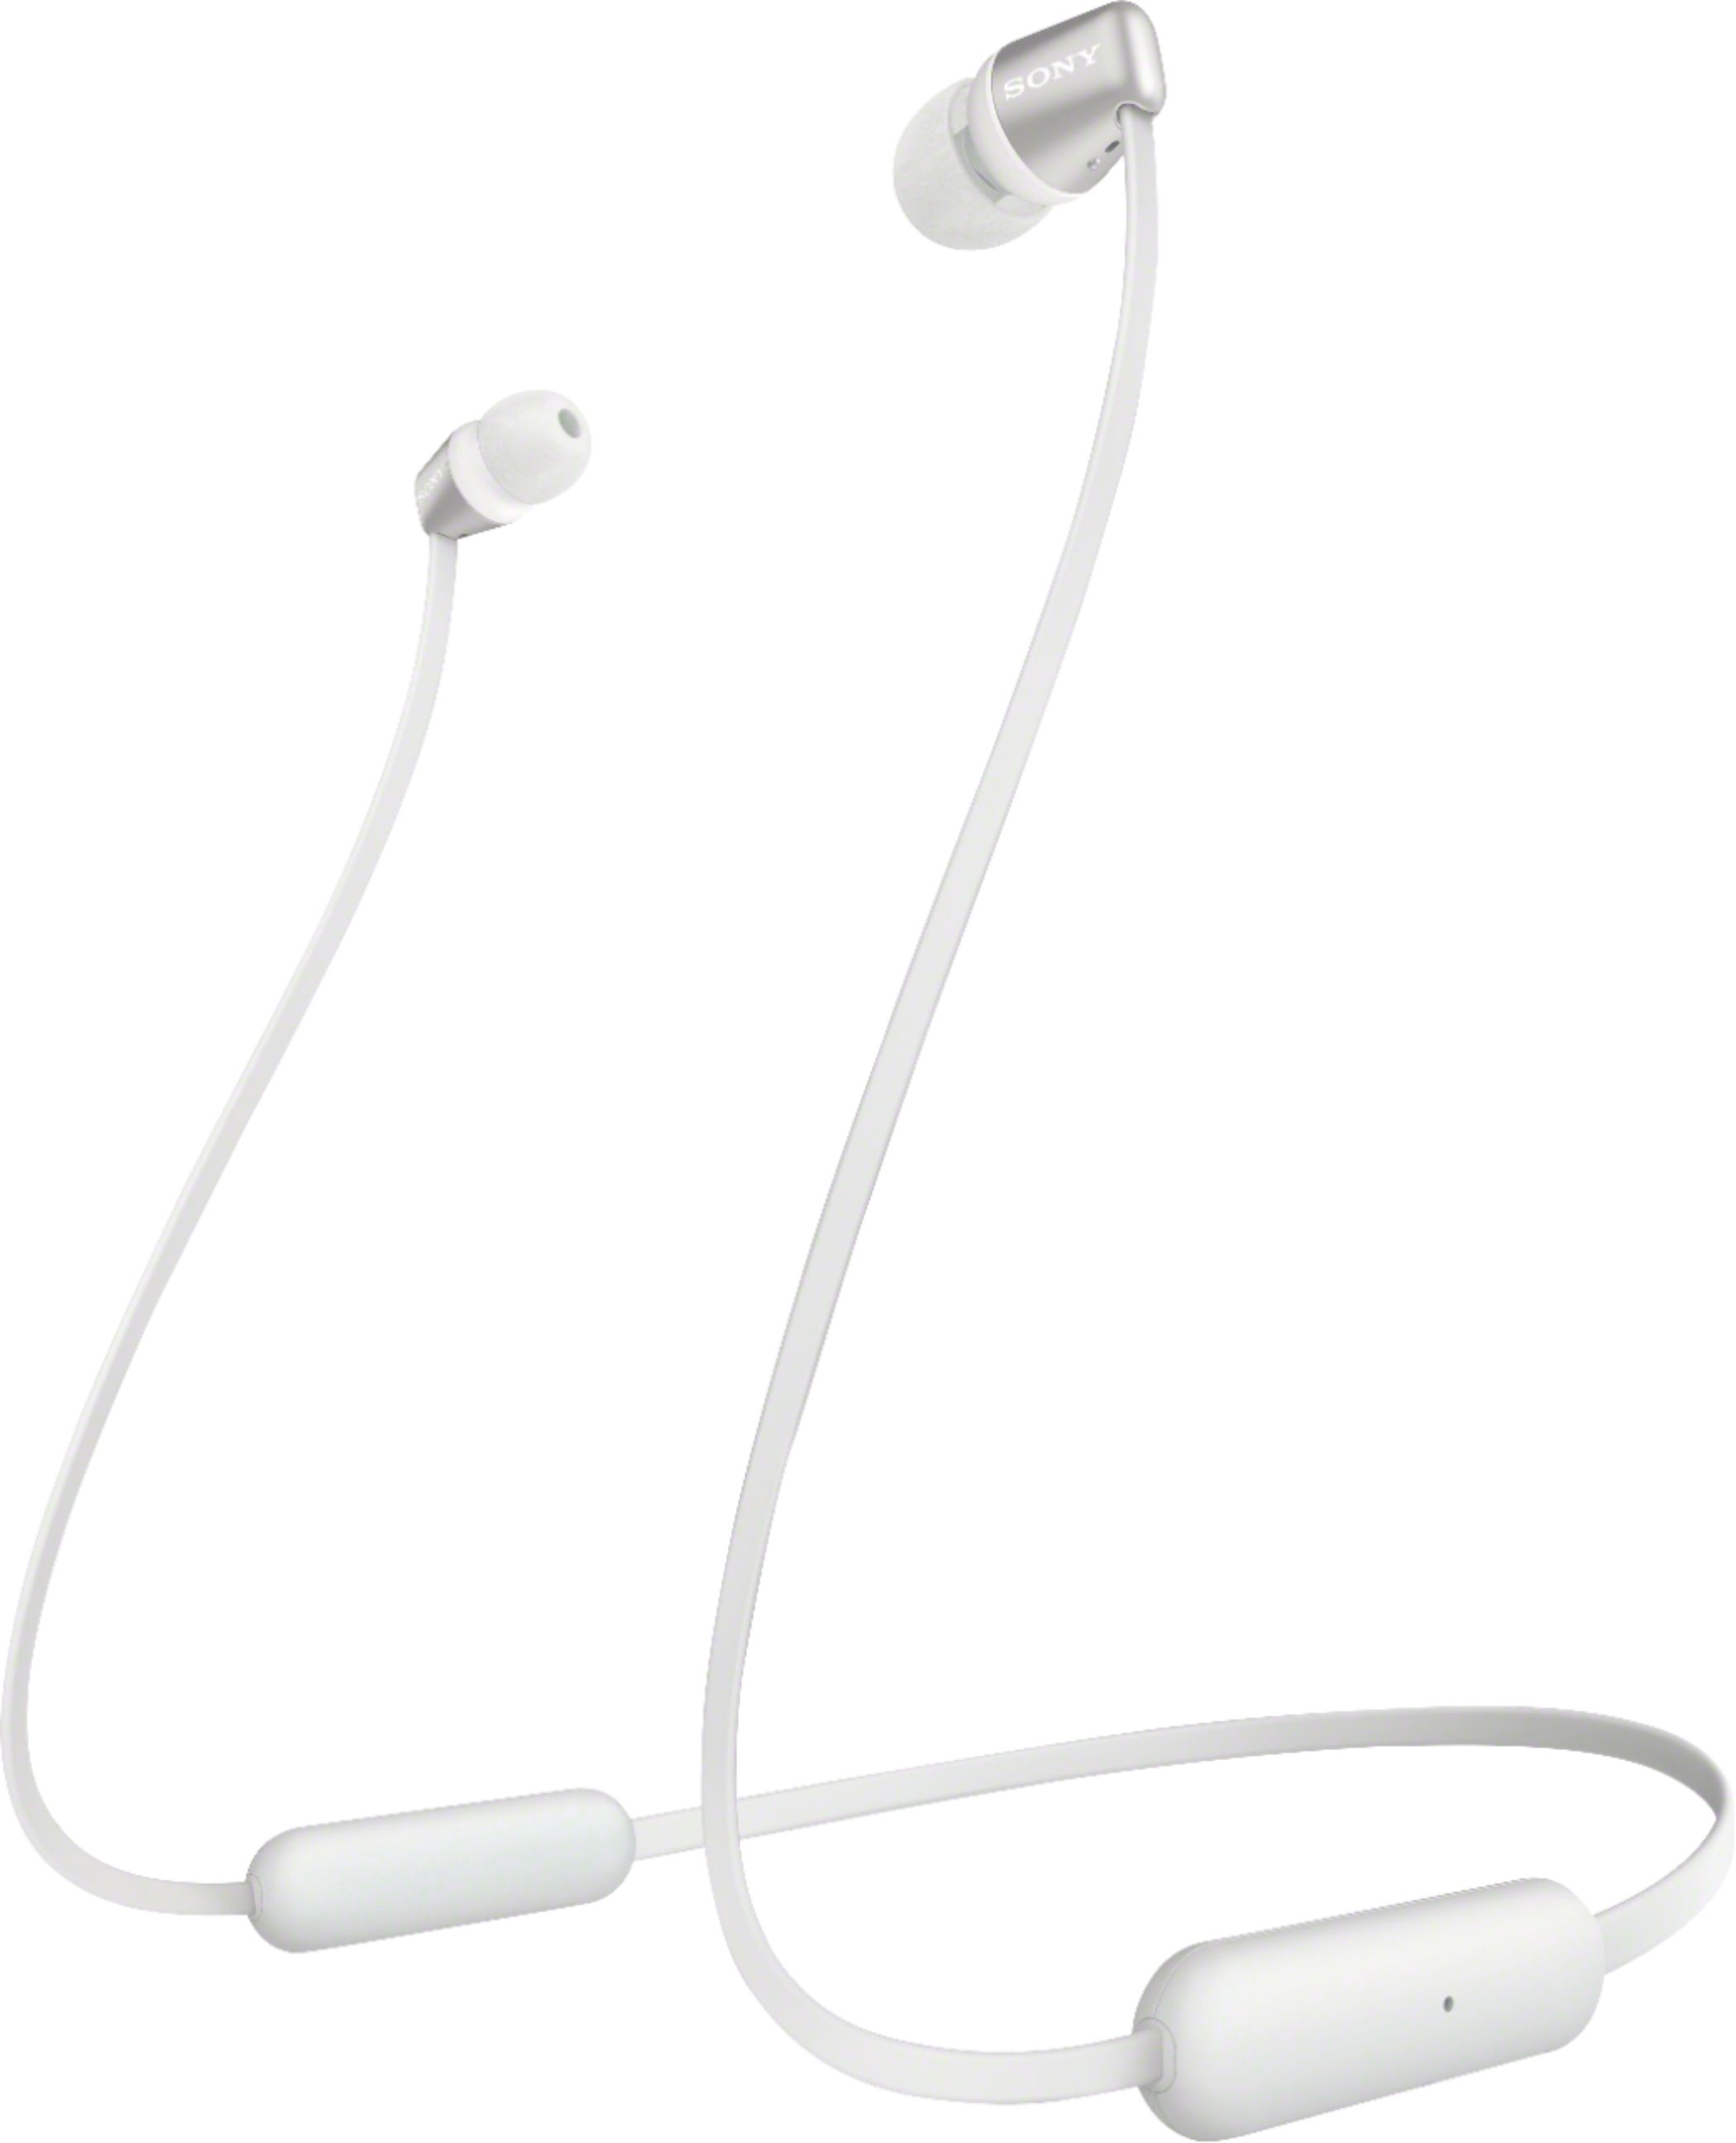 Angle View: Sony - WI-XB400 Wireless In-Ear Headphones - Blue